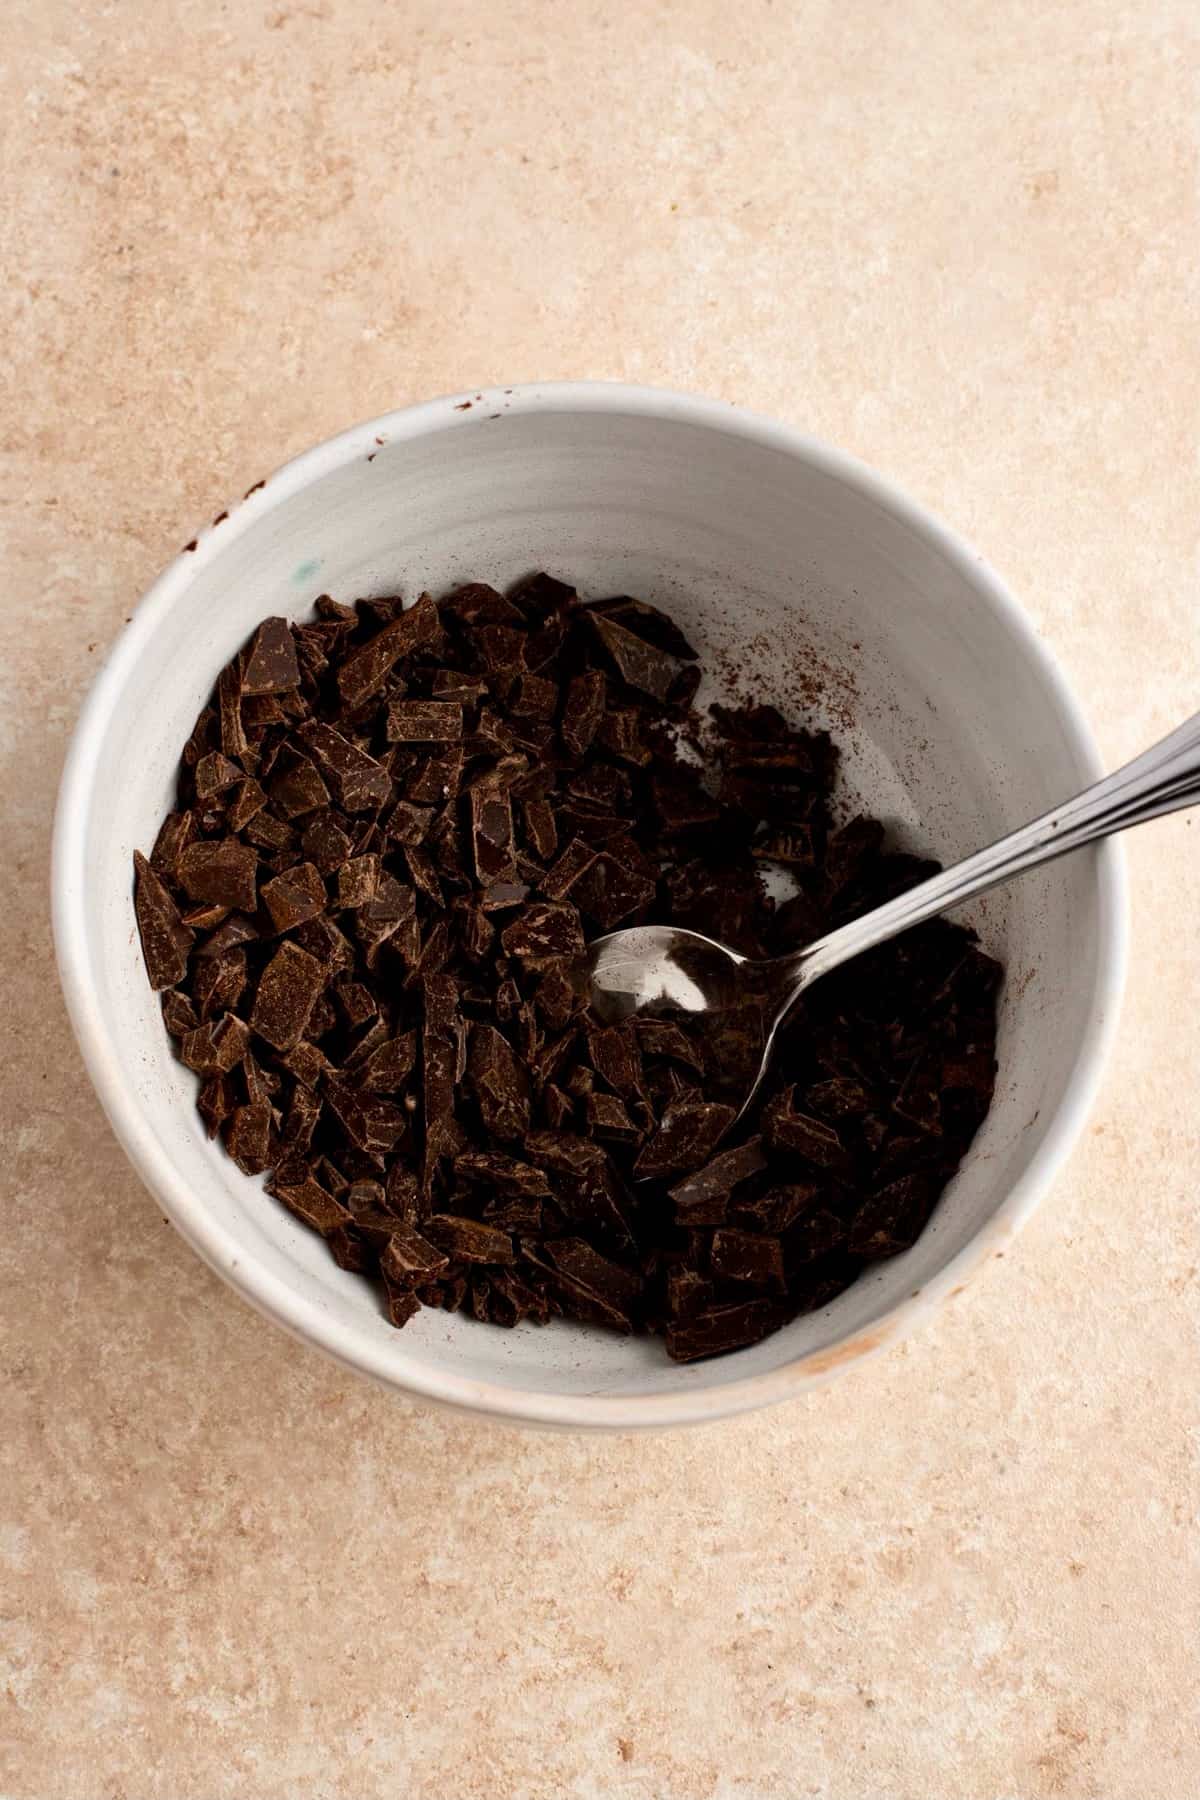 Prepare the chocolate for Chocolate Baklava